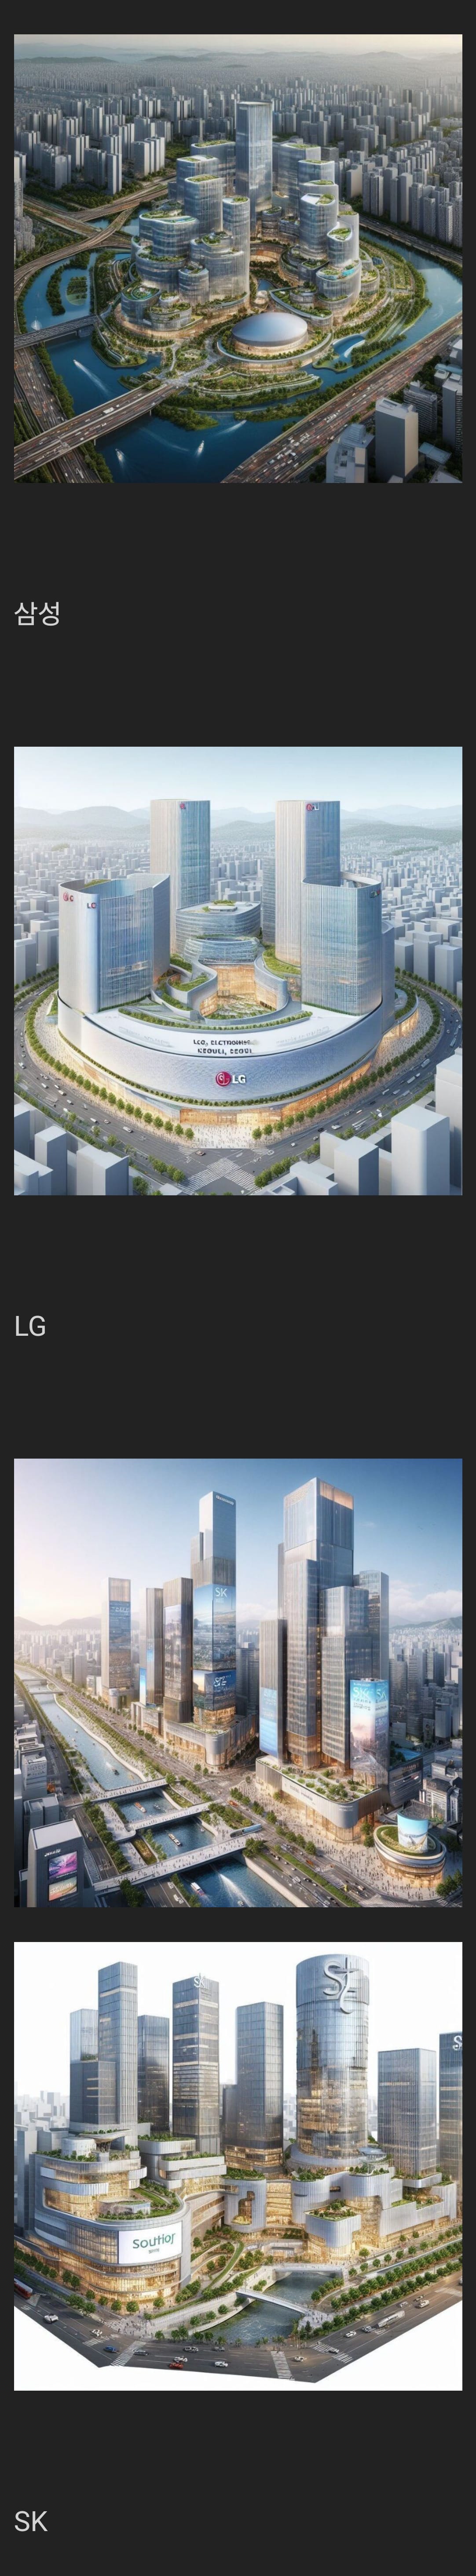 Ai가 상상해본 한국대기업의 본사 건물